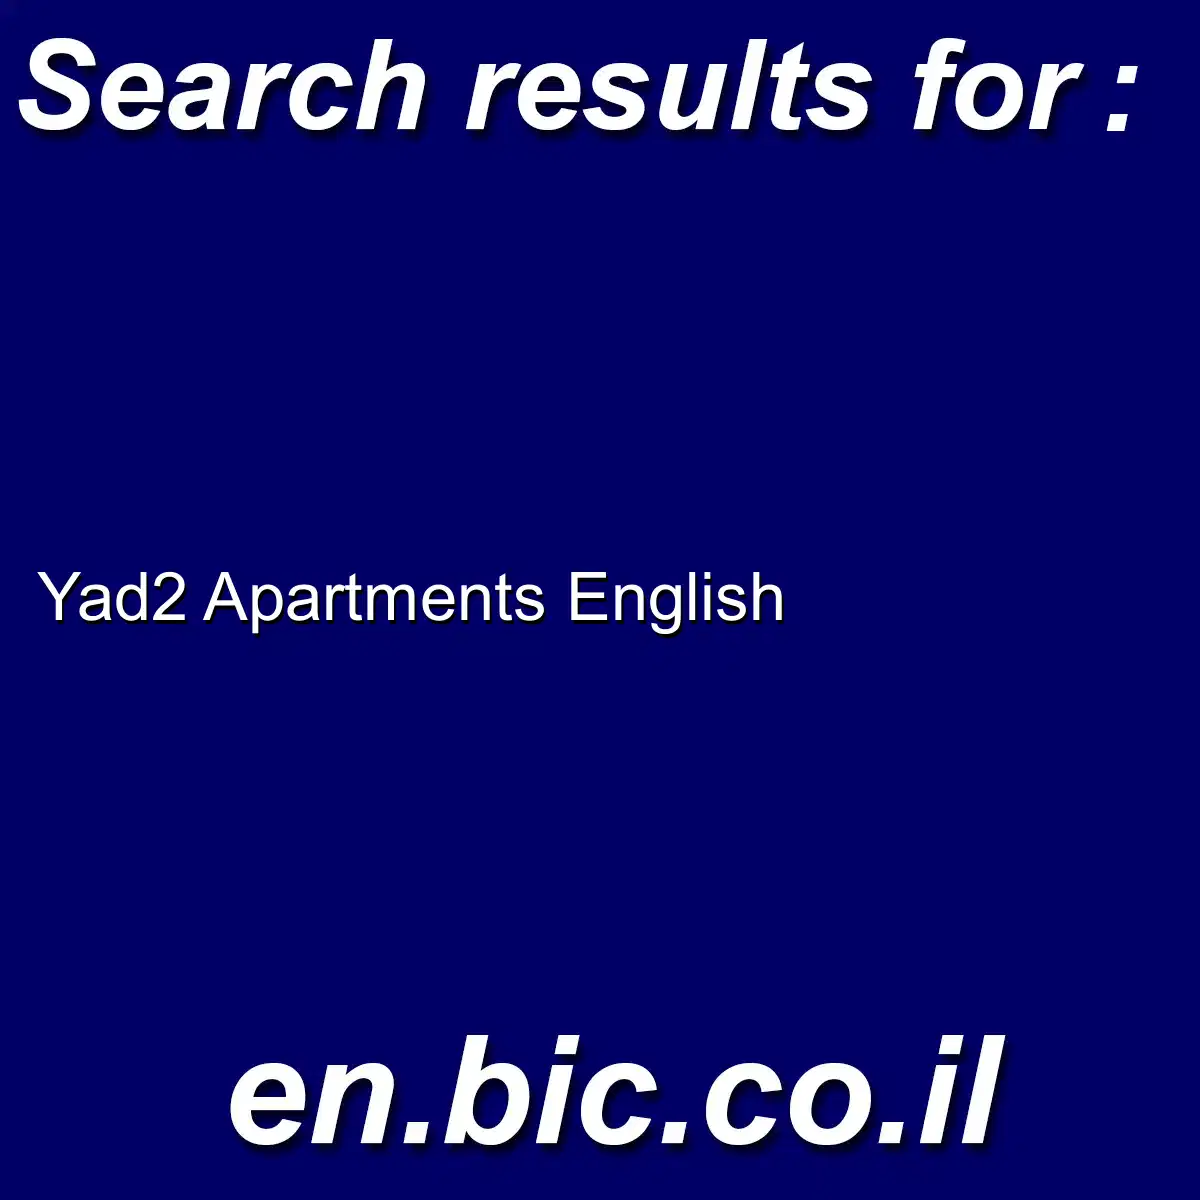 Yad2 apartments English